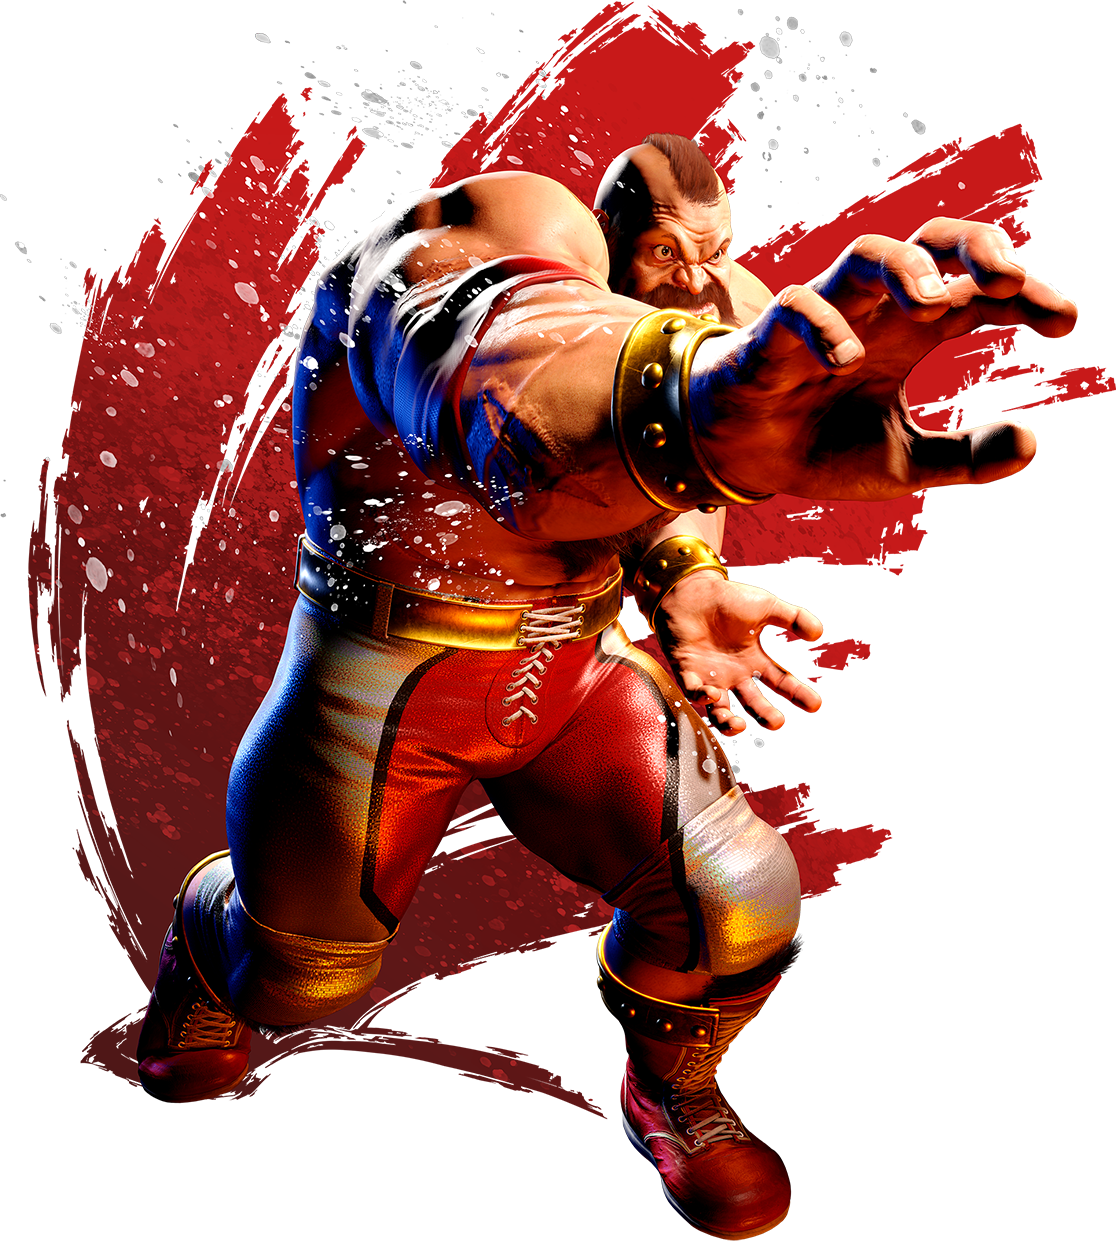 List of moves in Street Fighter III: 3rd Strike, Street Fighter Wiki